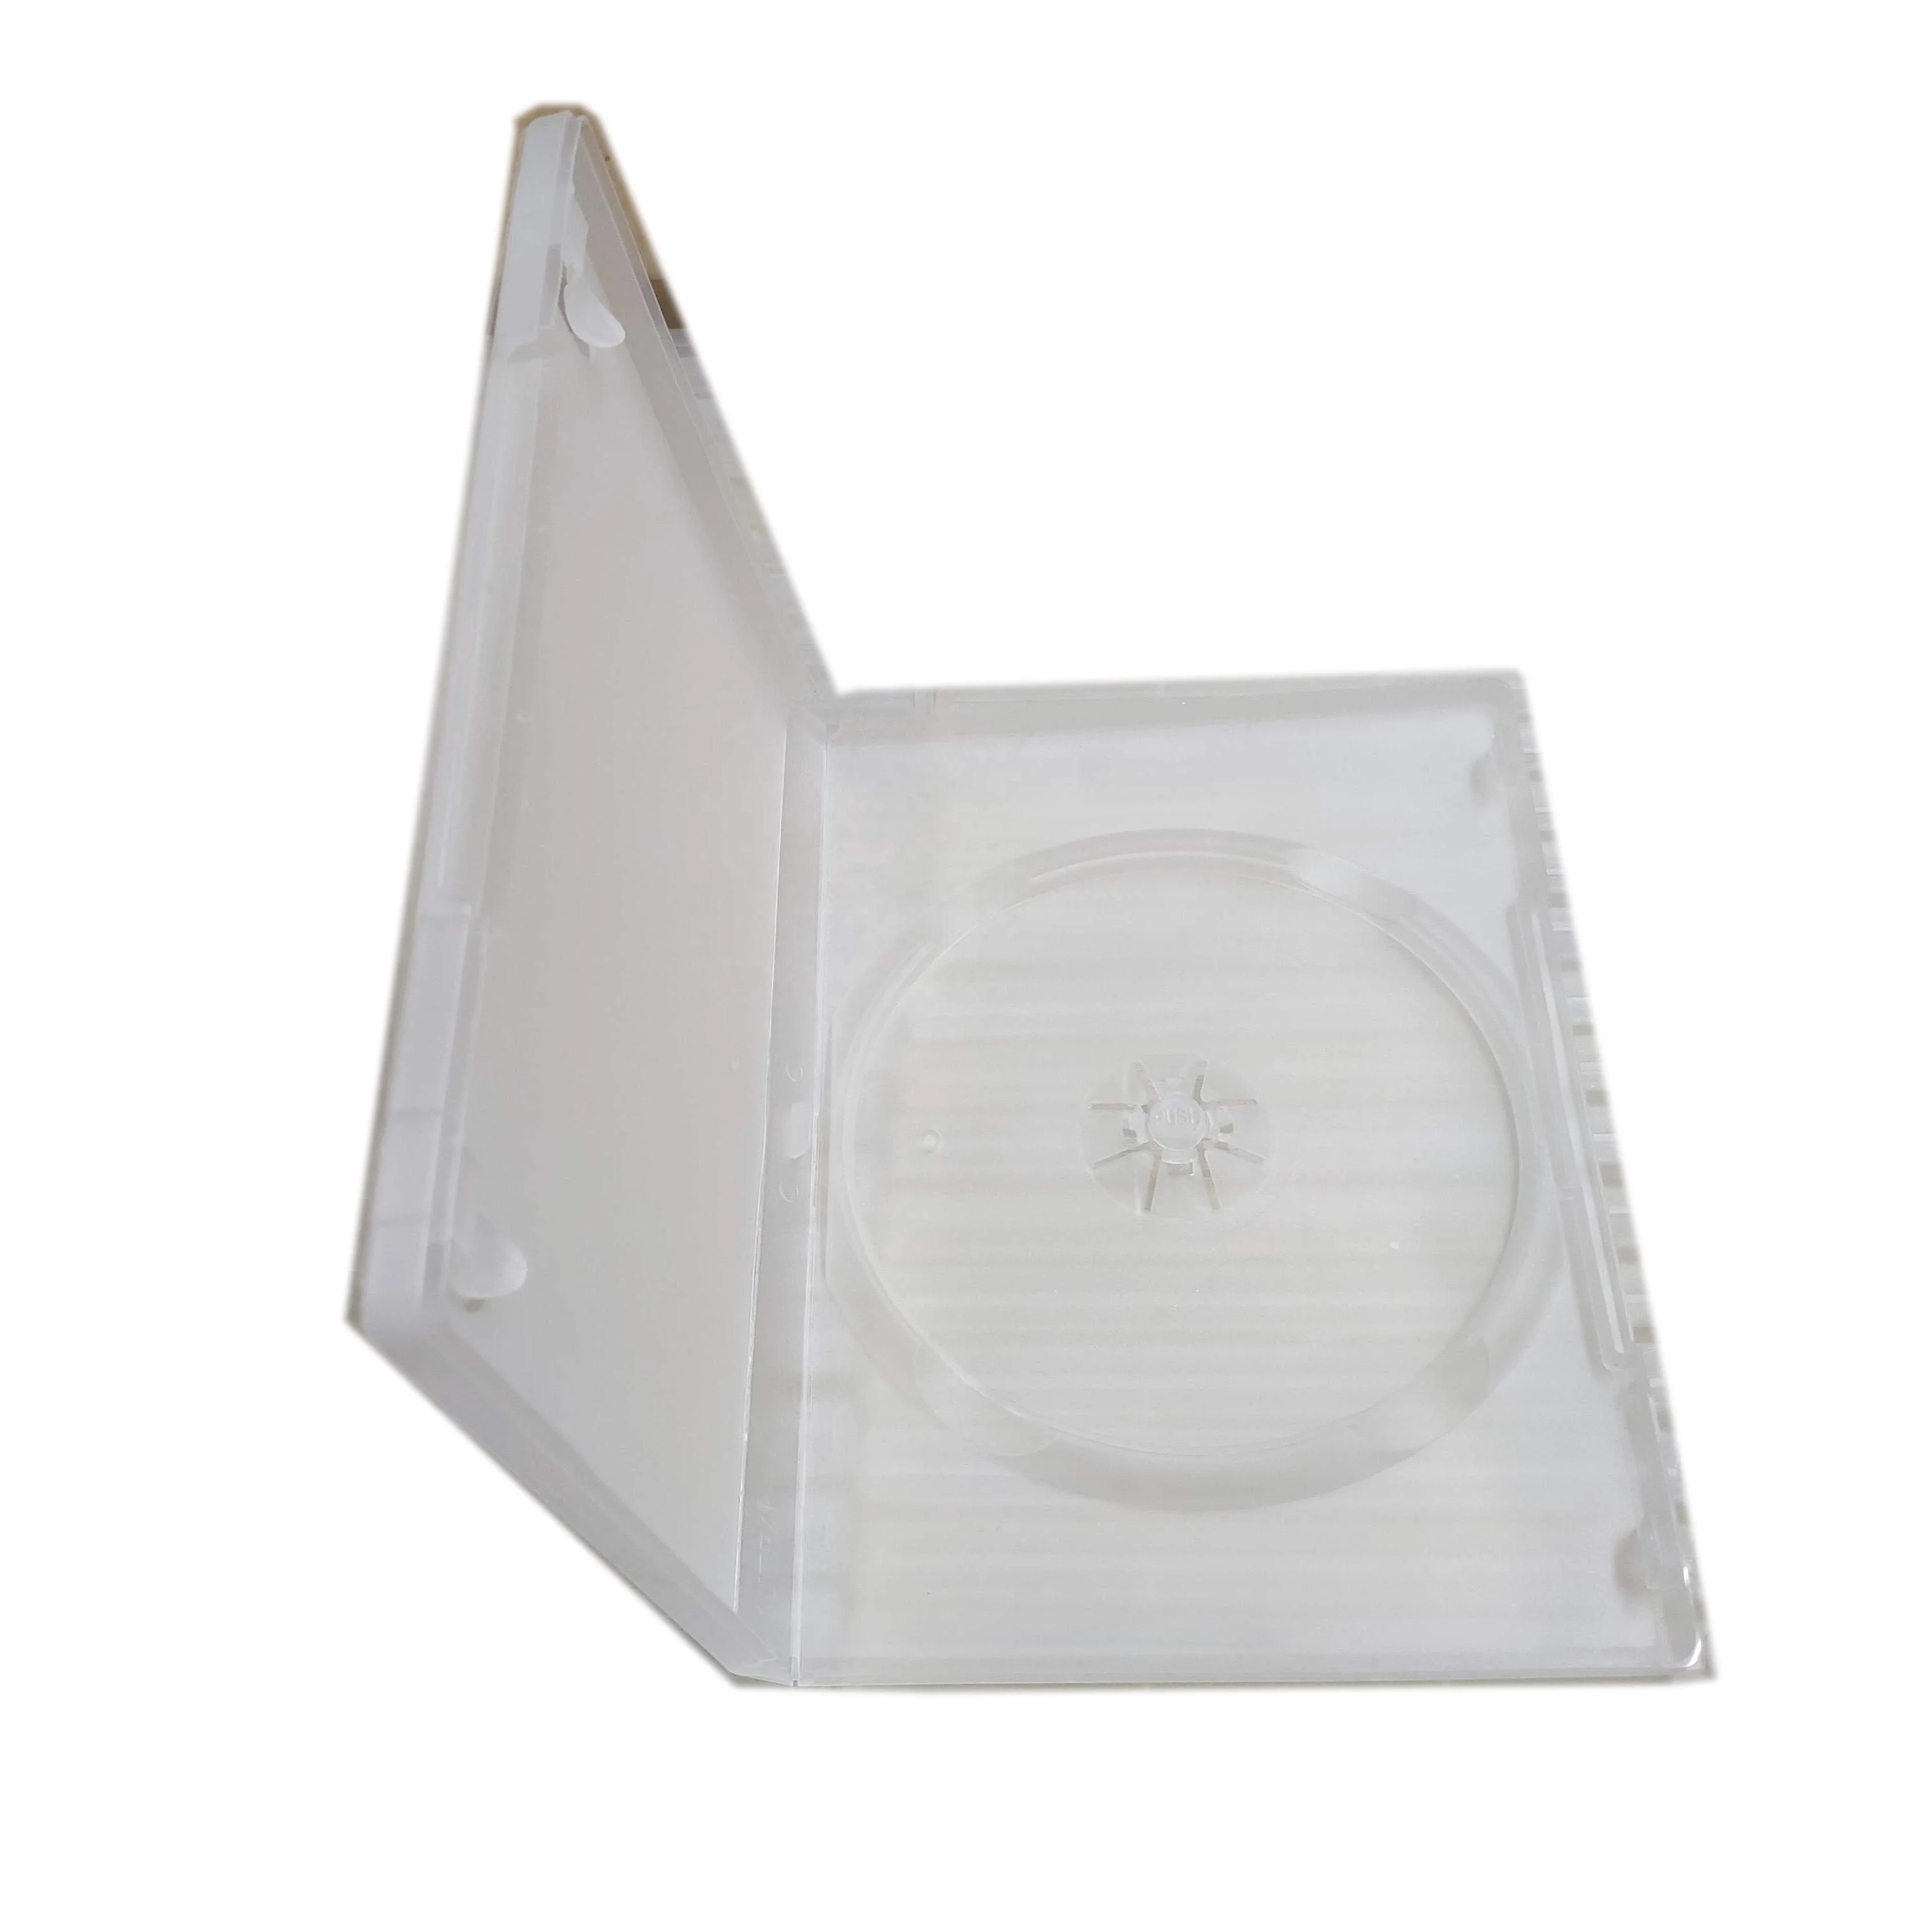 14mm Pp Single Disc Semi Clear Dvd Case Send Hand Buy 14mm Super Clear Dvd Case Dvd Case Size Cm Product On Alibaba Com